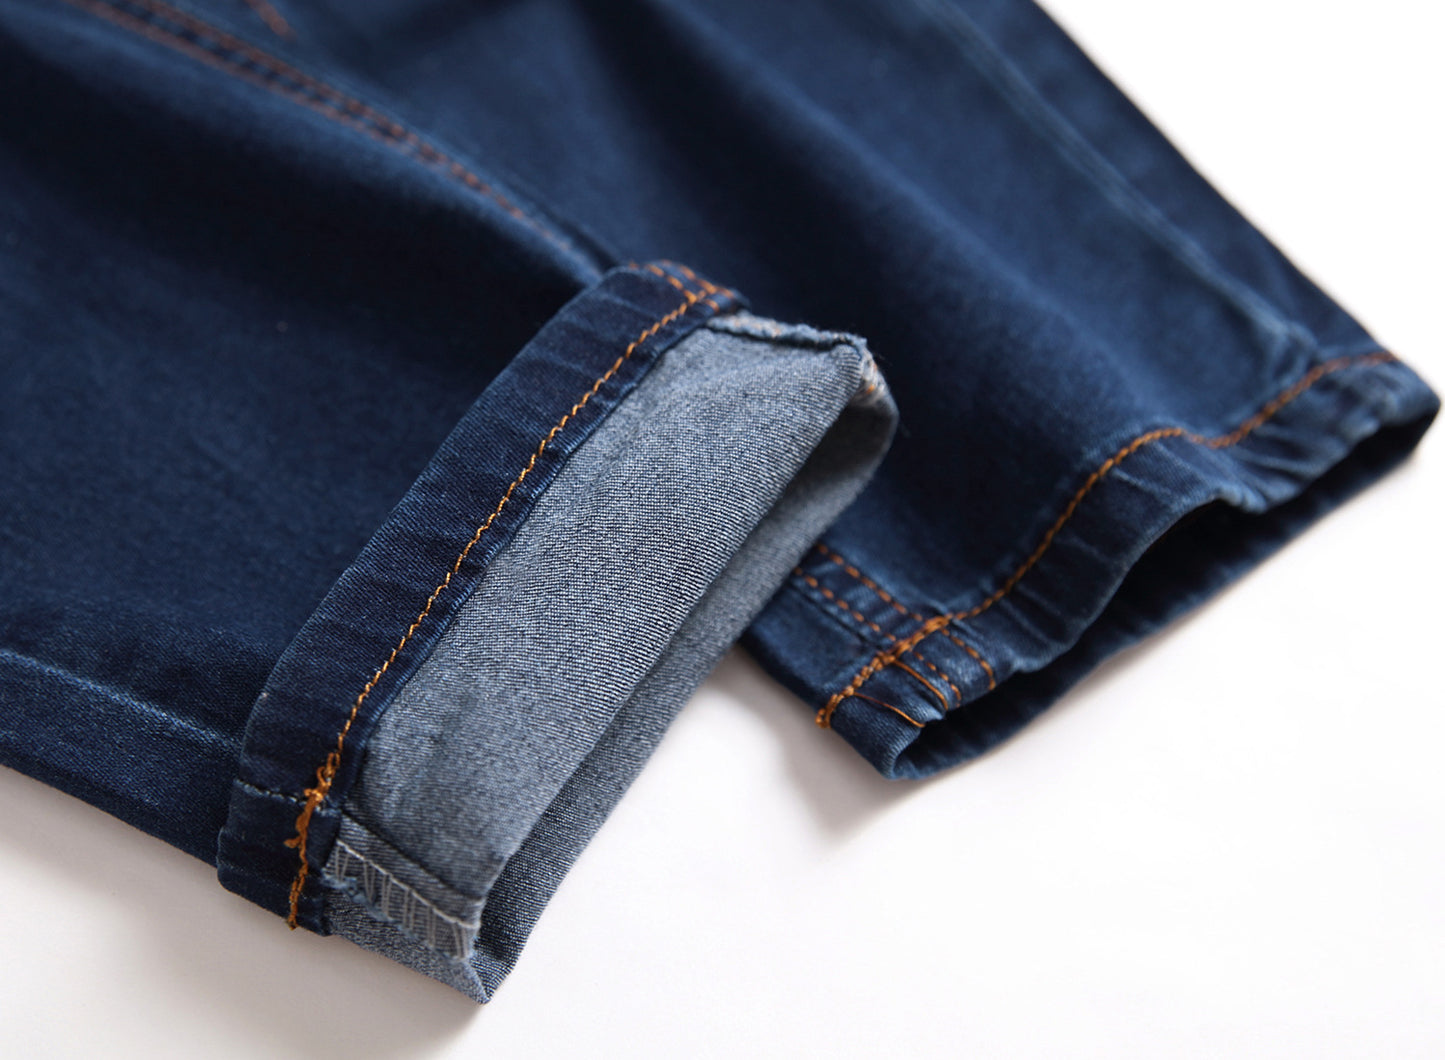 Casual Broken Holes Jeans for Men